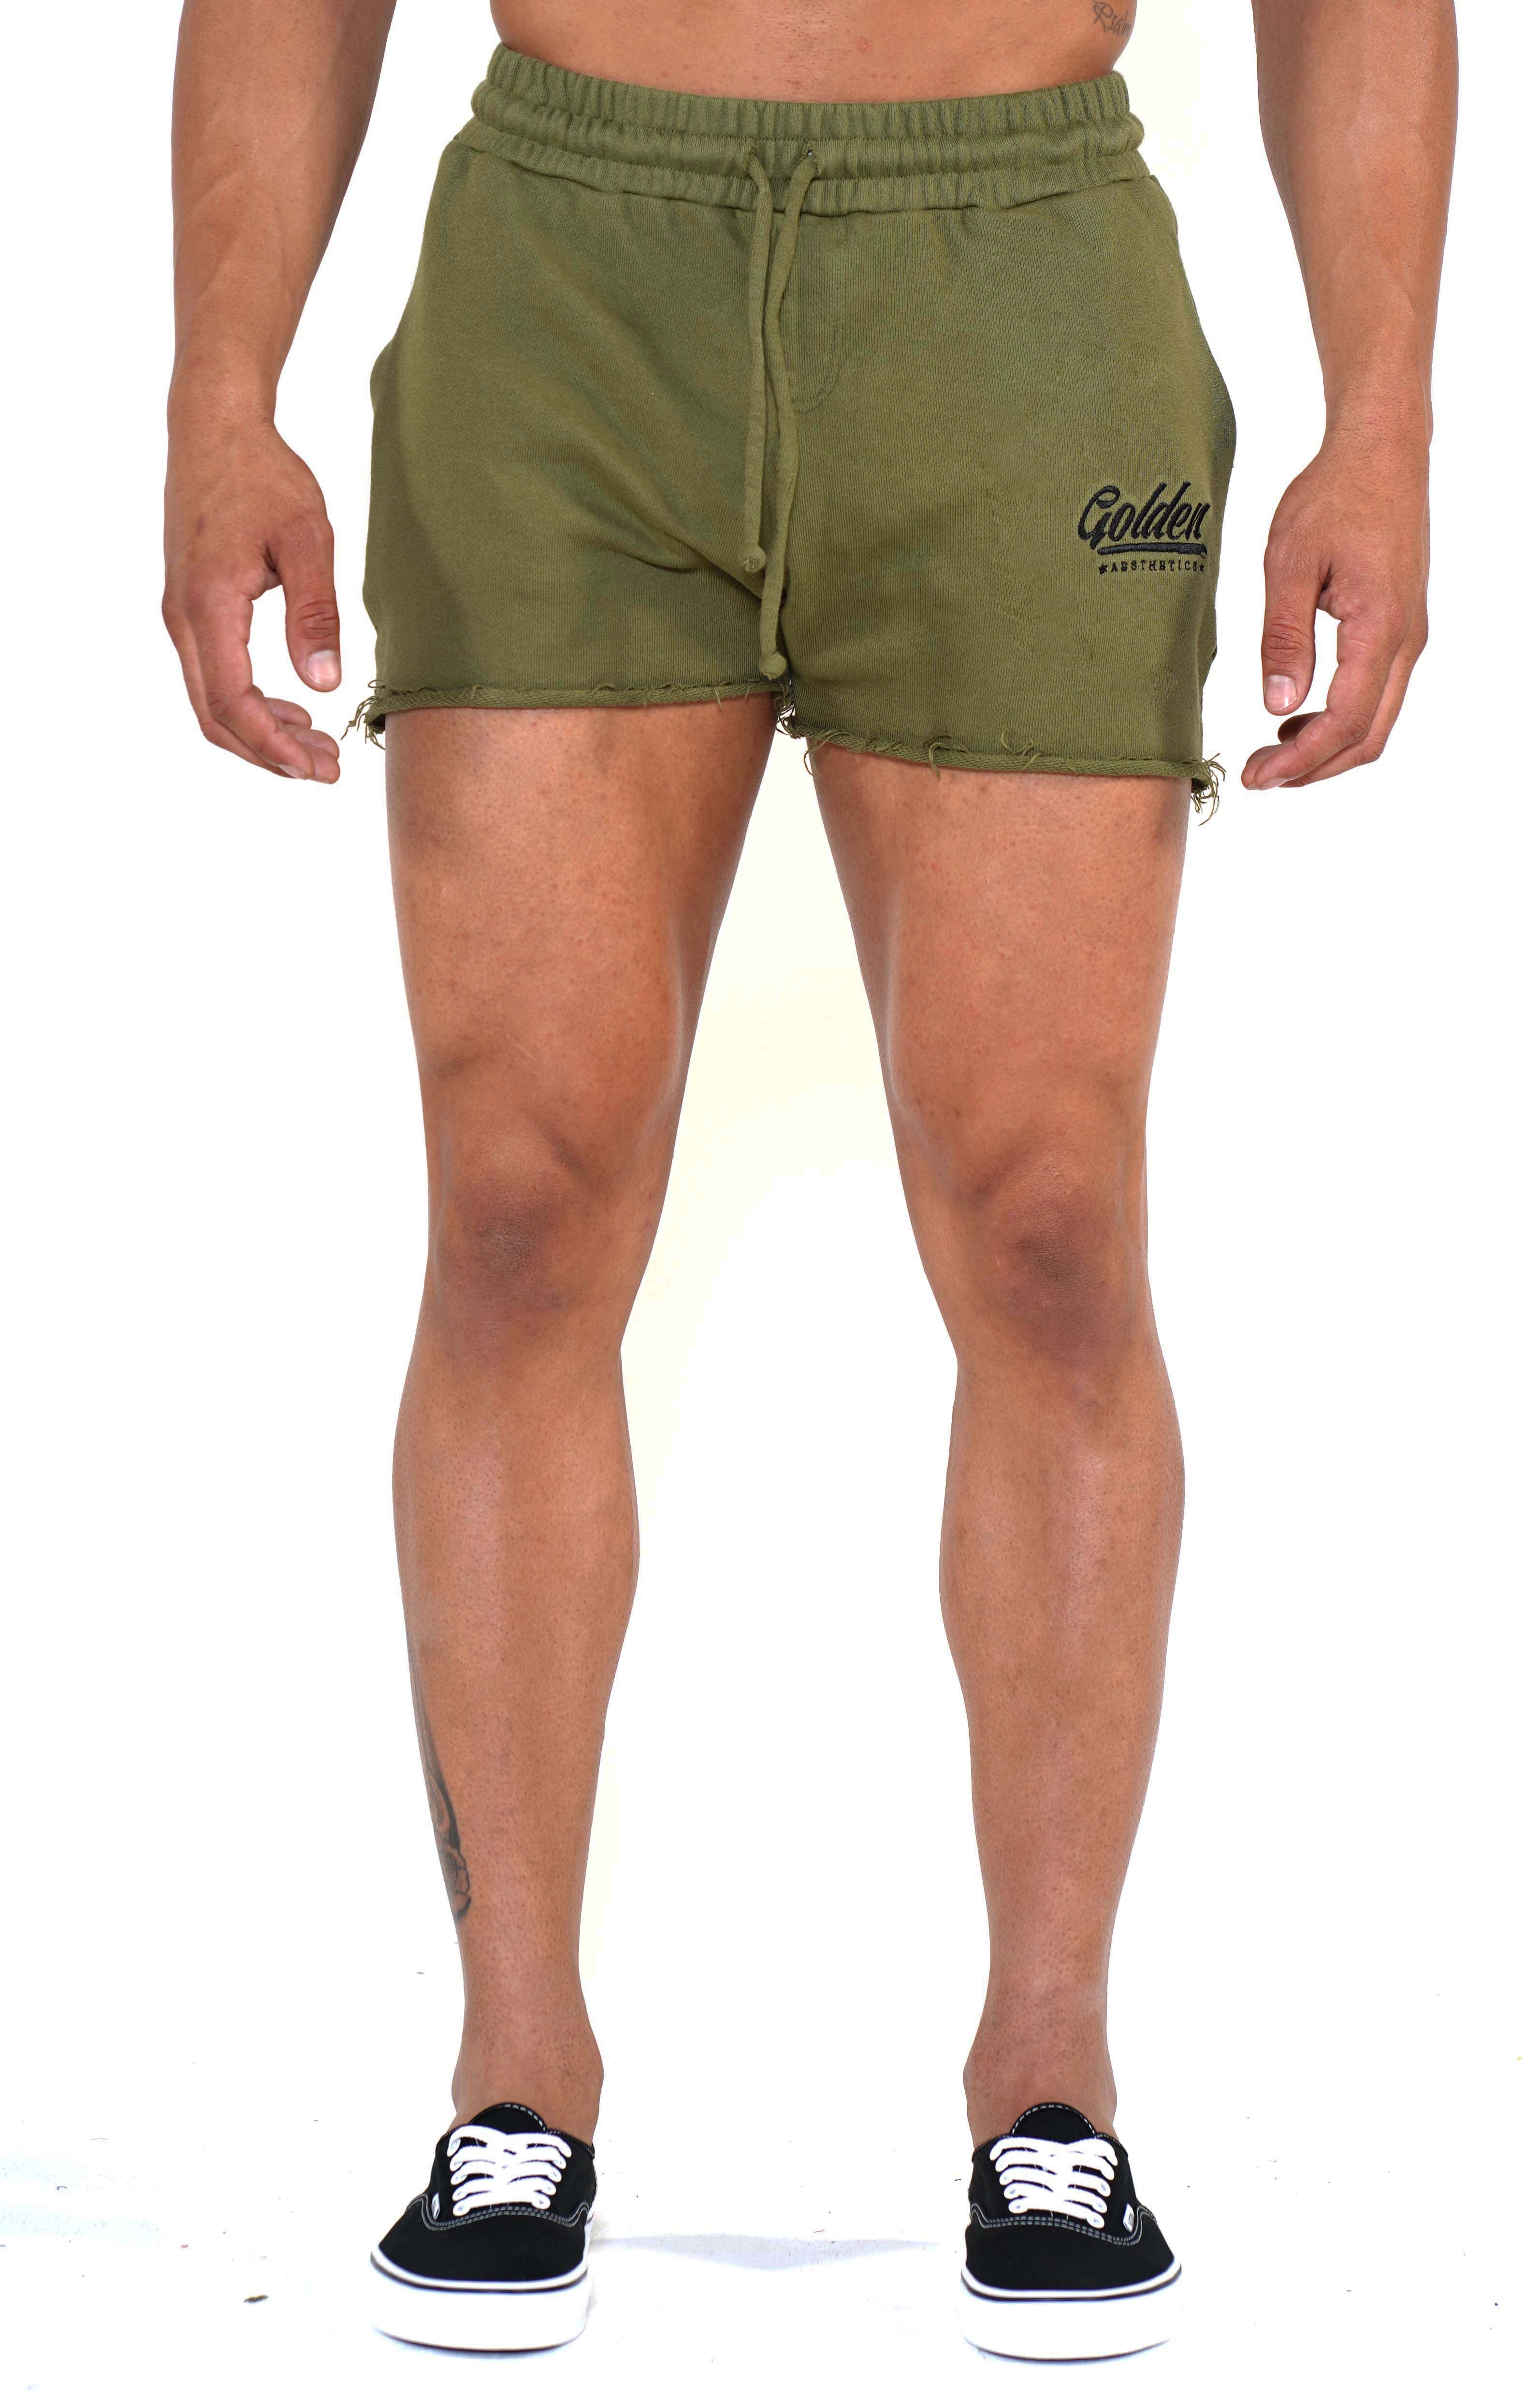 Men's Army Green/Black Shorts - Golden Aesthetics